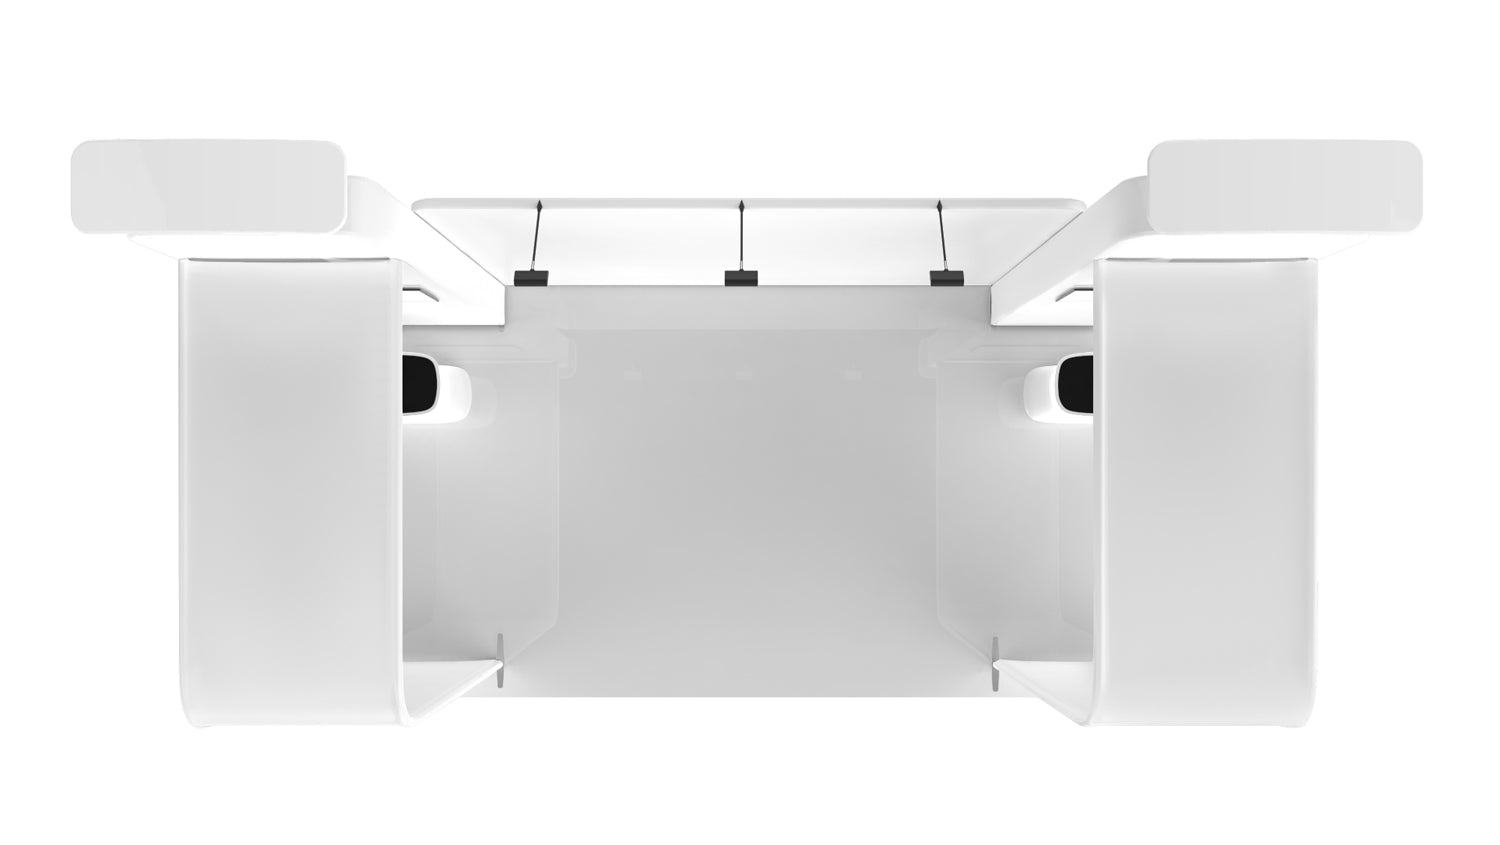 20x10 trade show booth 3D model floorplan